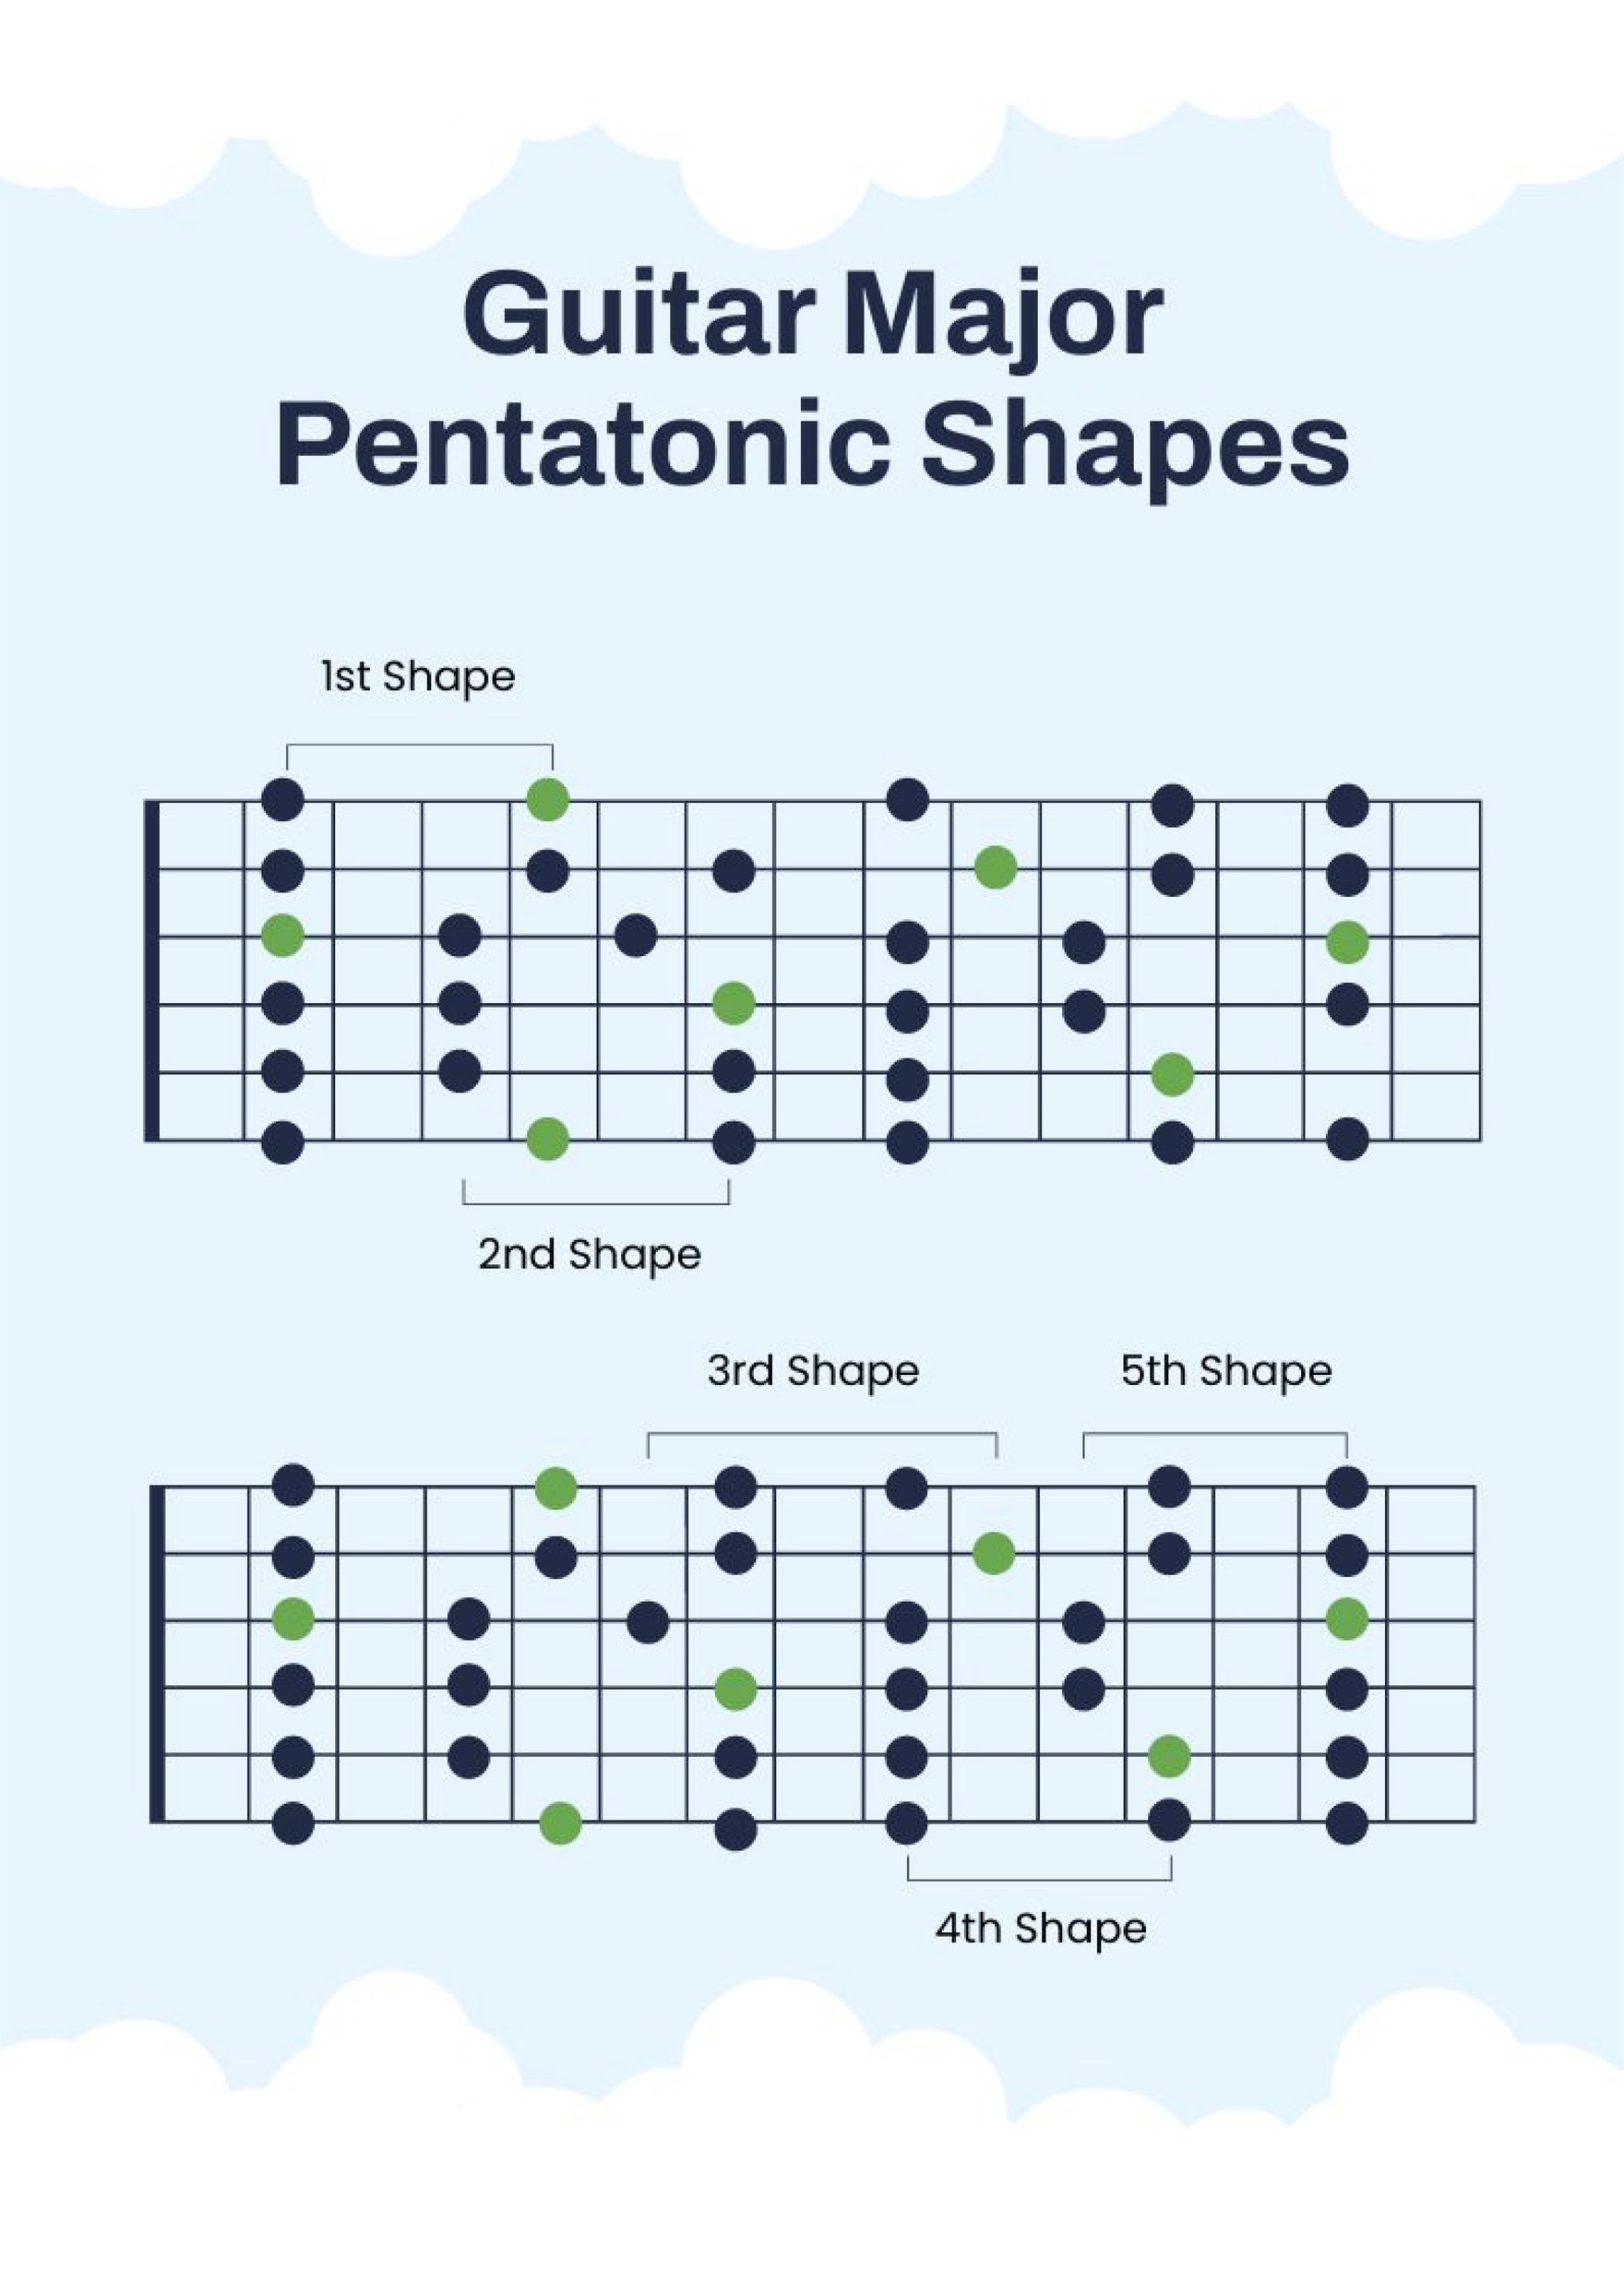 Guitar Major Pentatonic Scale 5 Shapes Chart